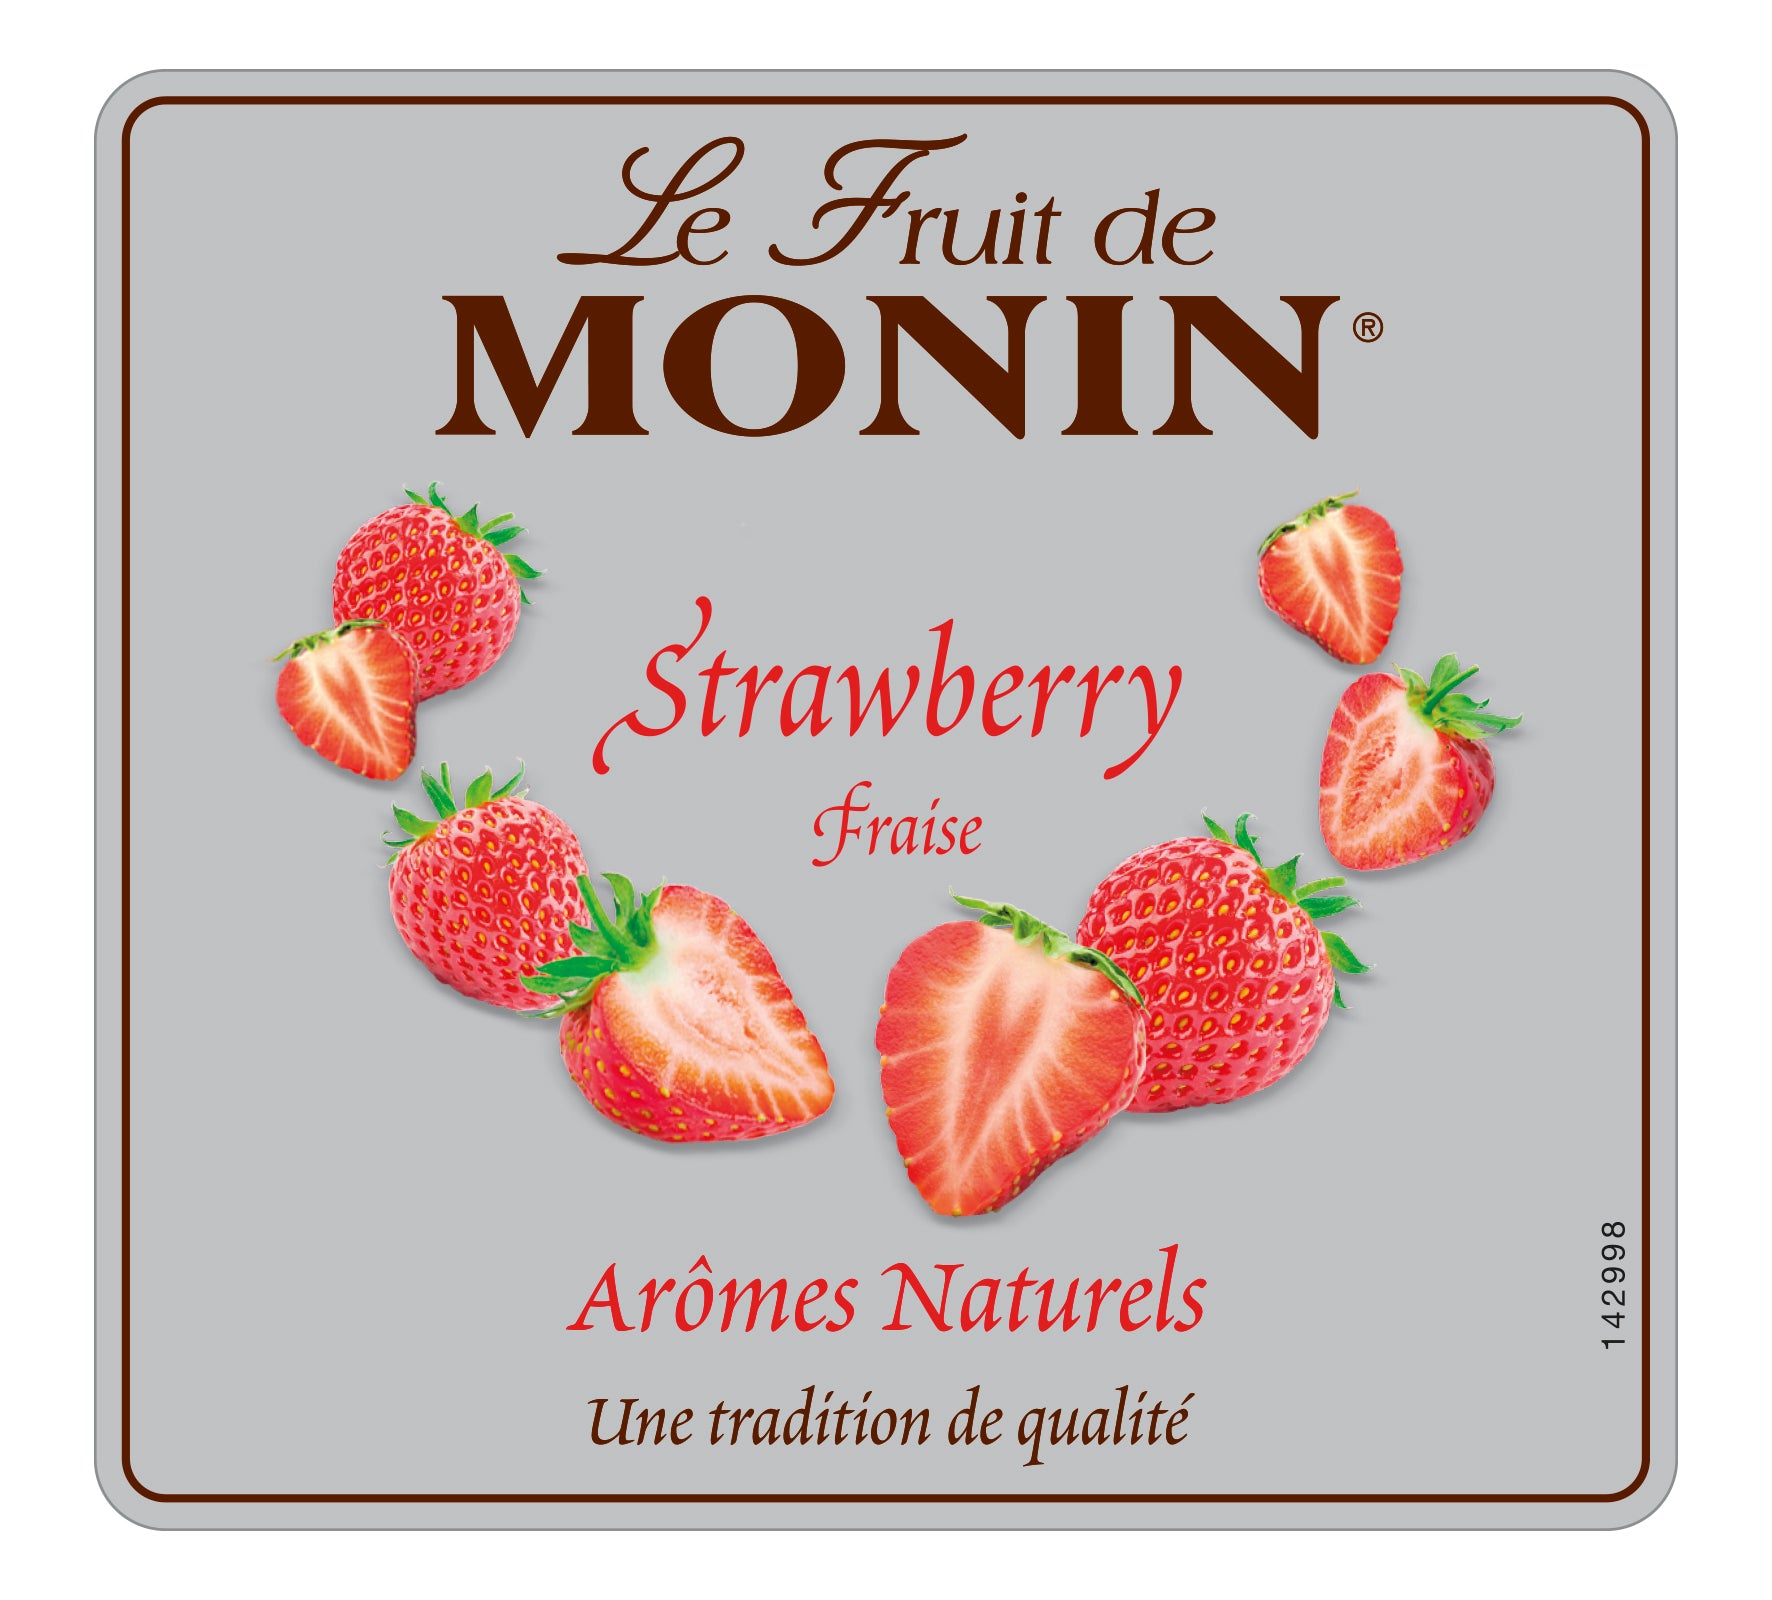 Monin Strawberry Puree Syrup 1ltr